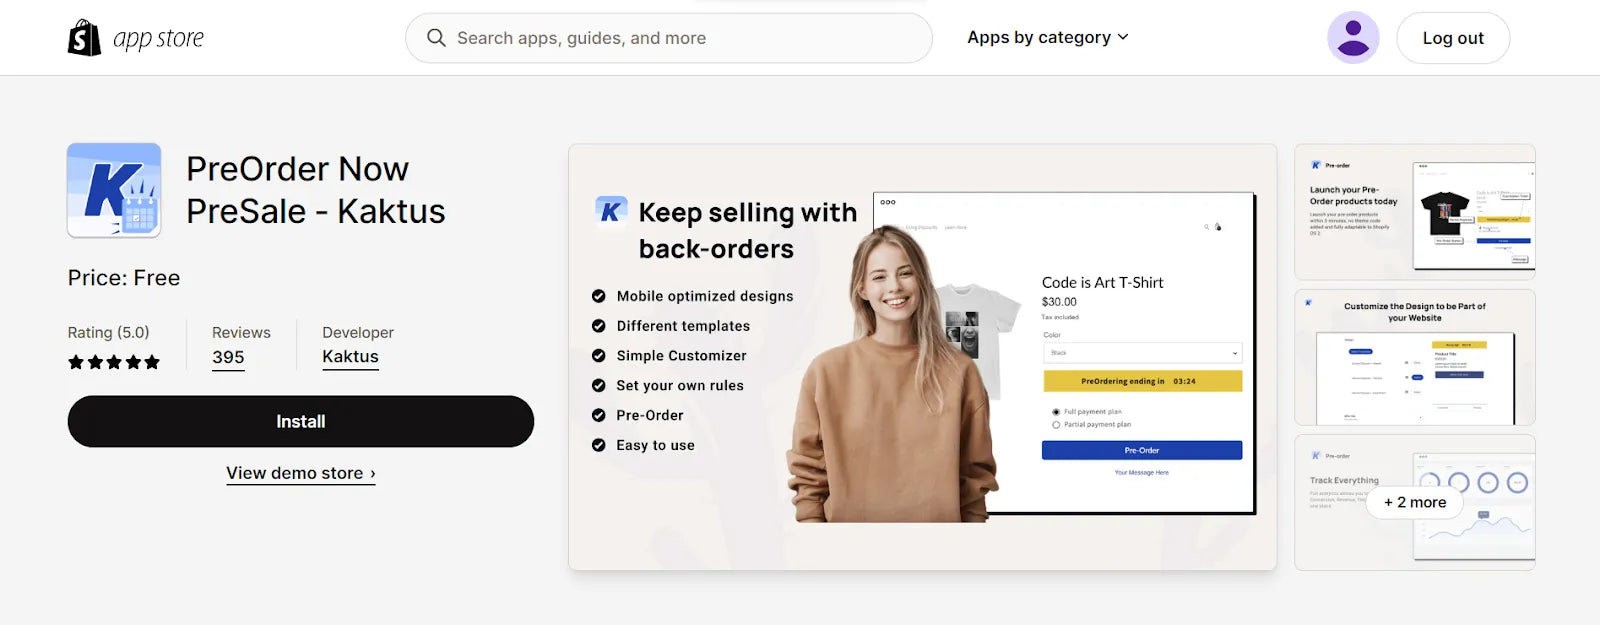 Shopify pre-order app - PreOrder Now PreSale ‑ Kaktus